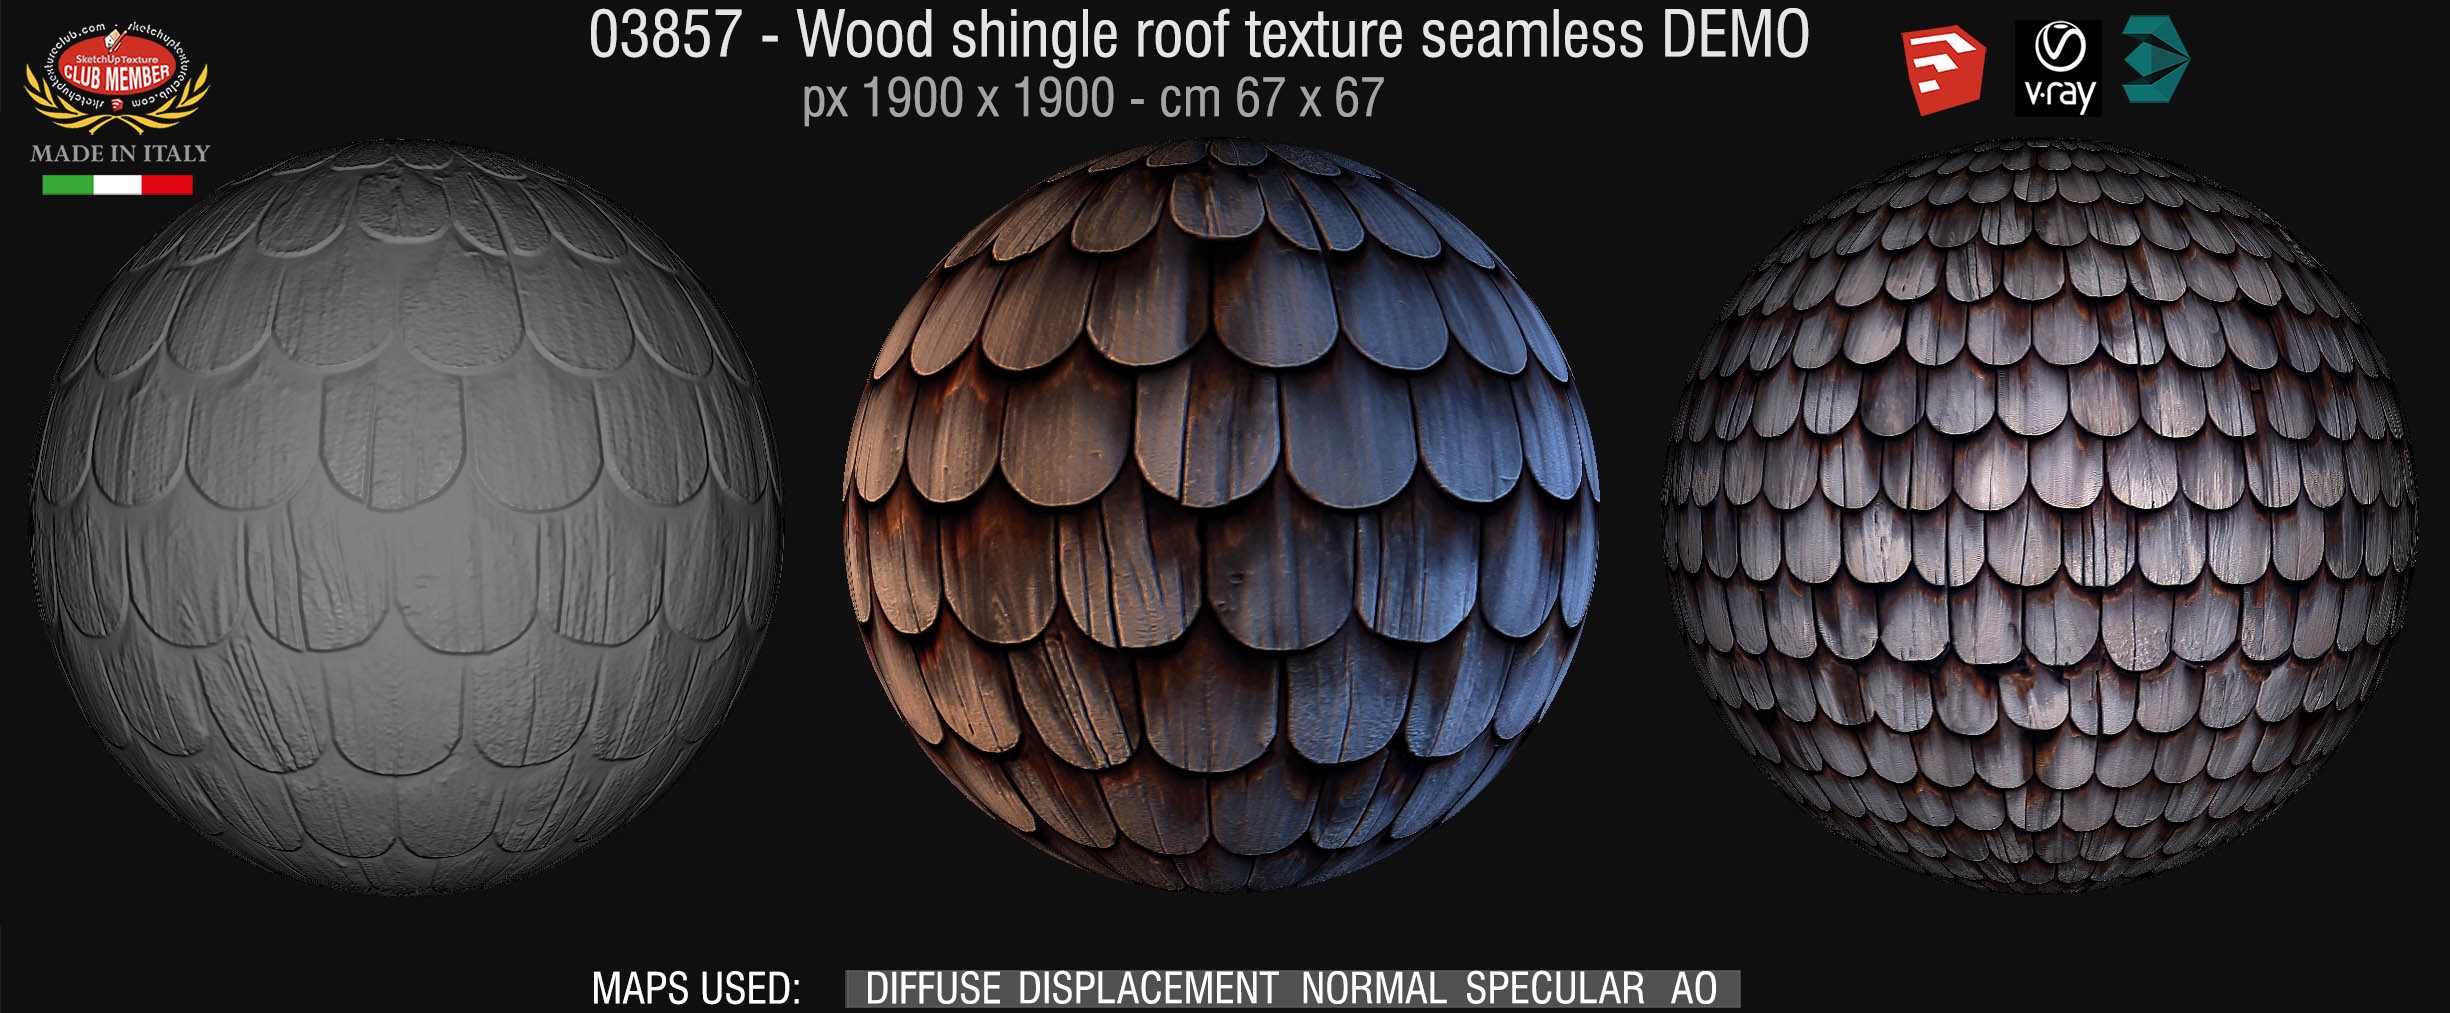 03857 Wood shingle roof texture seamless + maps DEMO